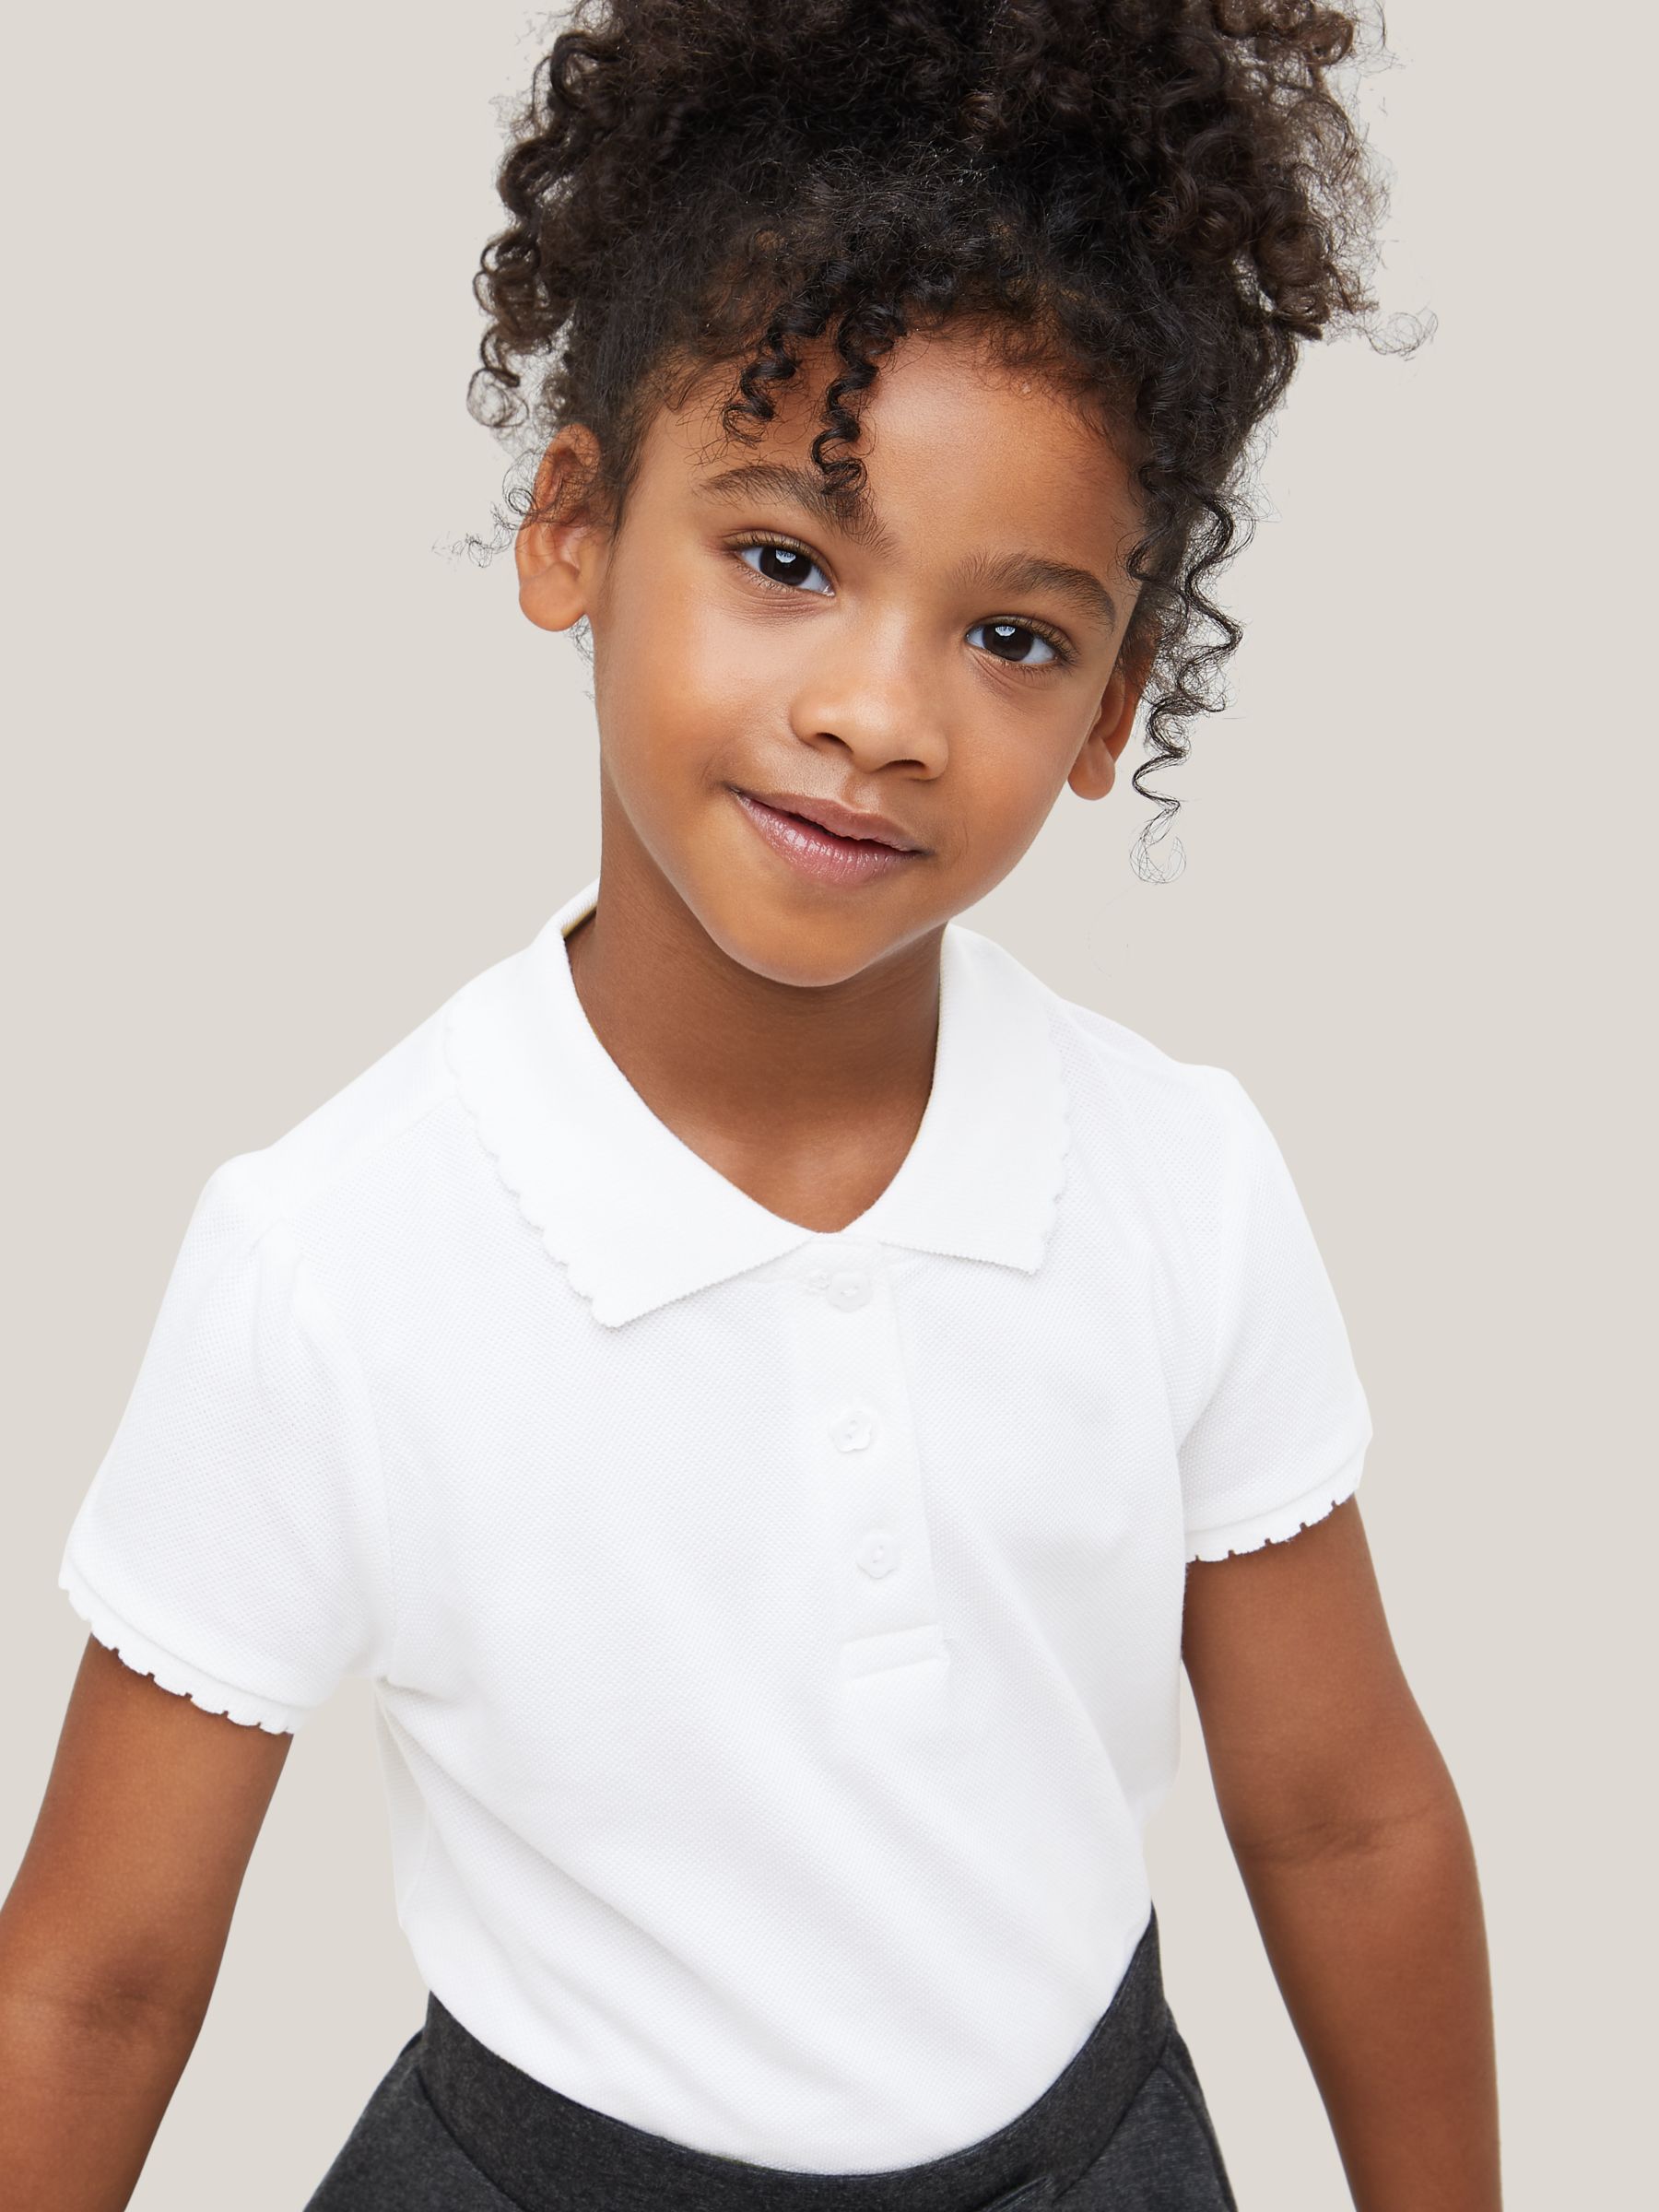 Girls Children White Colour Long Sleeve Shirt Girls School Uniform 2 to 16 year 